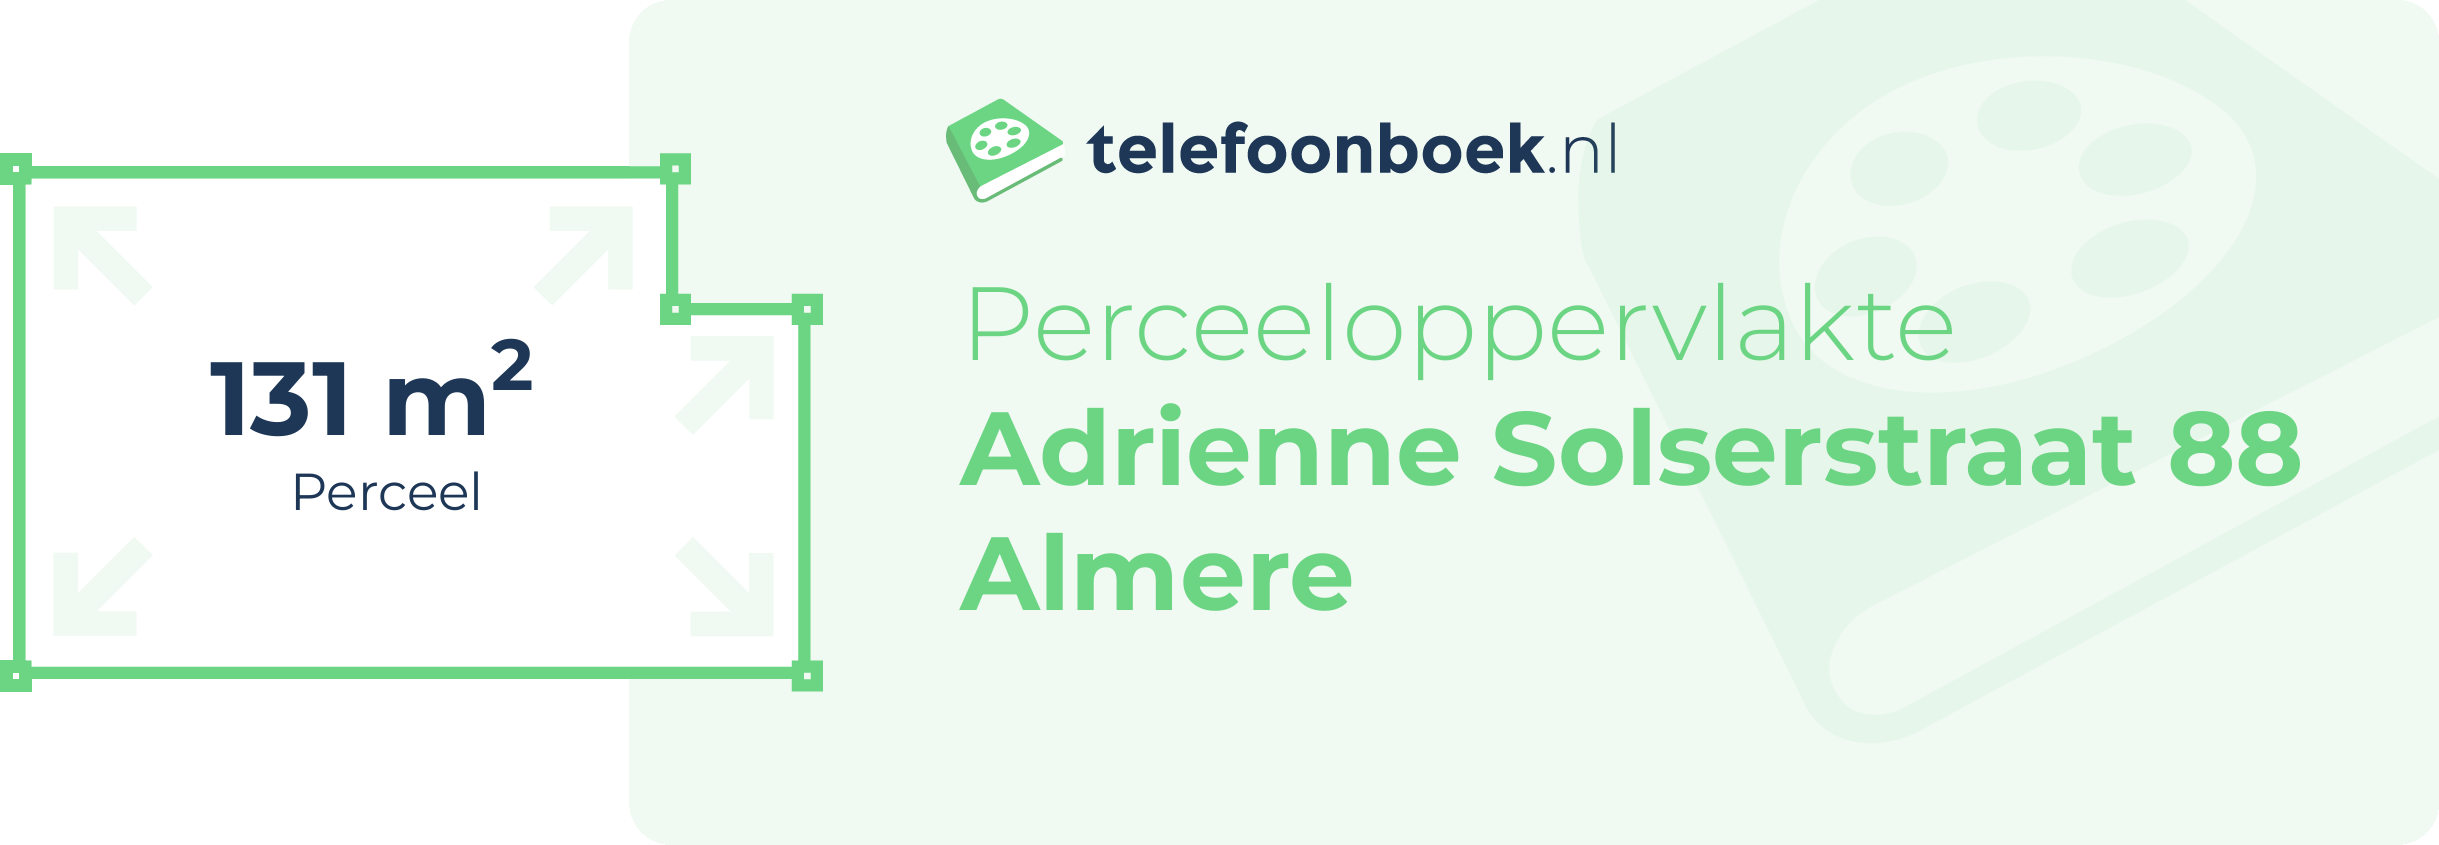 Perceeloppervlakte Adrienne Solserstraat 88 Almere